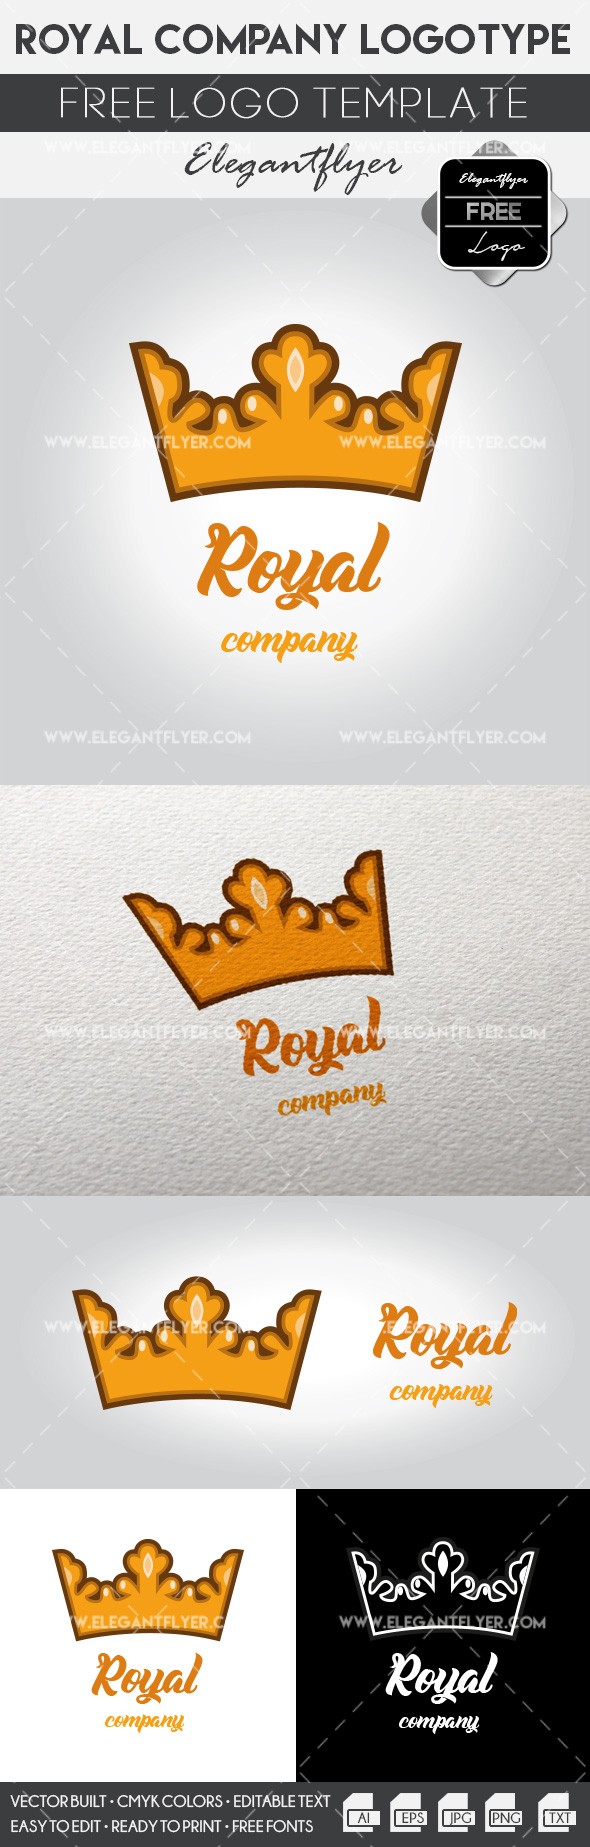 Royal company by ElegantFlyer